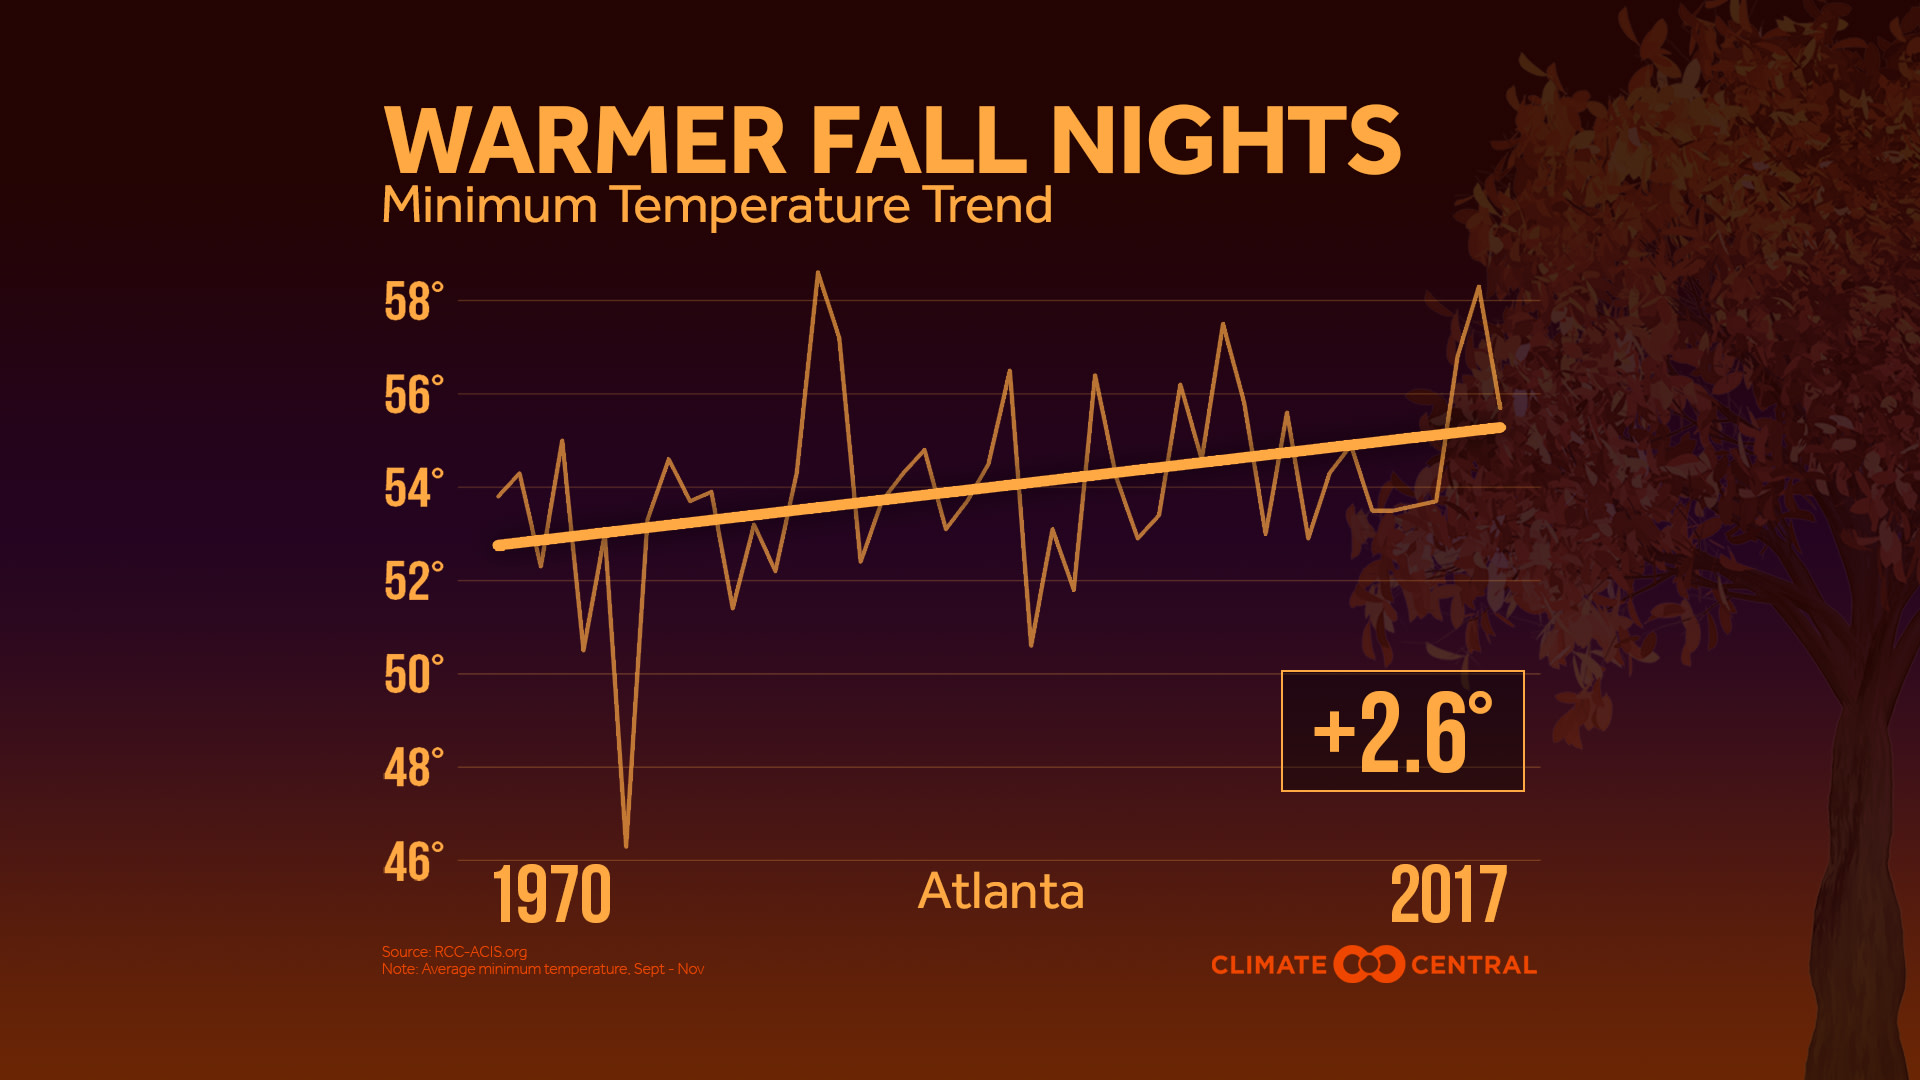 Market - Warming Fall Nights